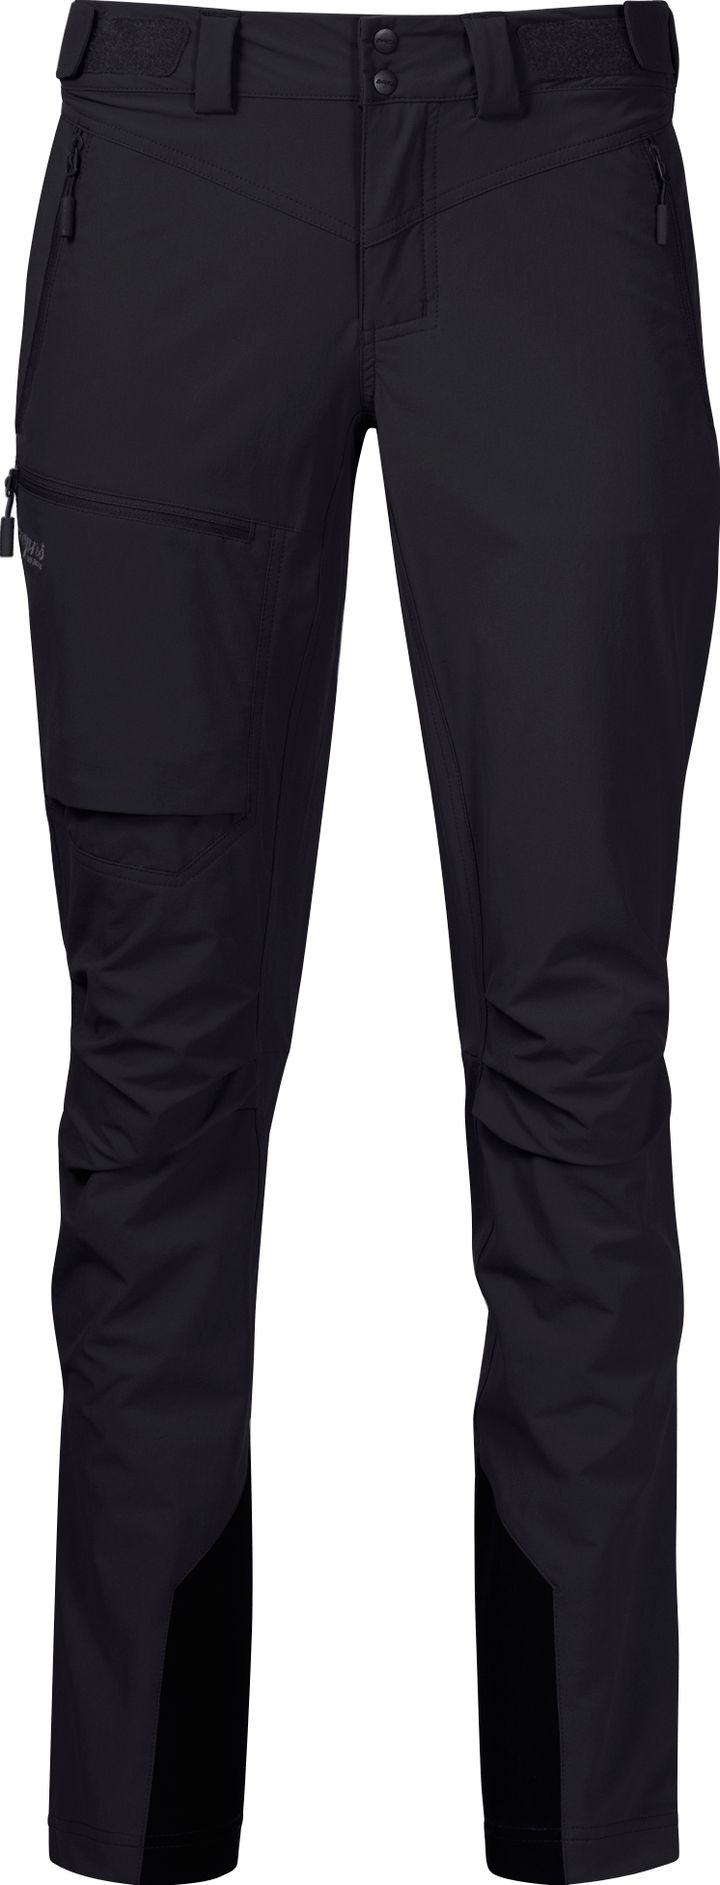 Bergans Women's Breheimen Softshell Pants Black/Solid Charcoal Bergans